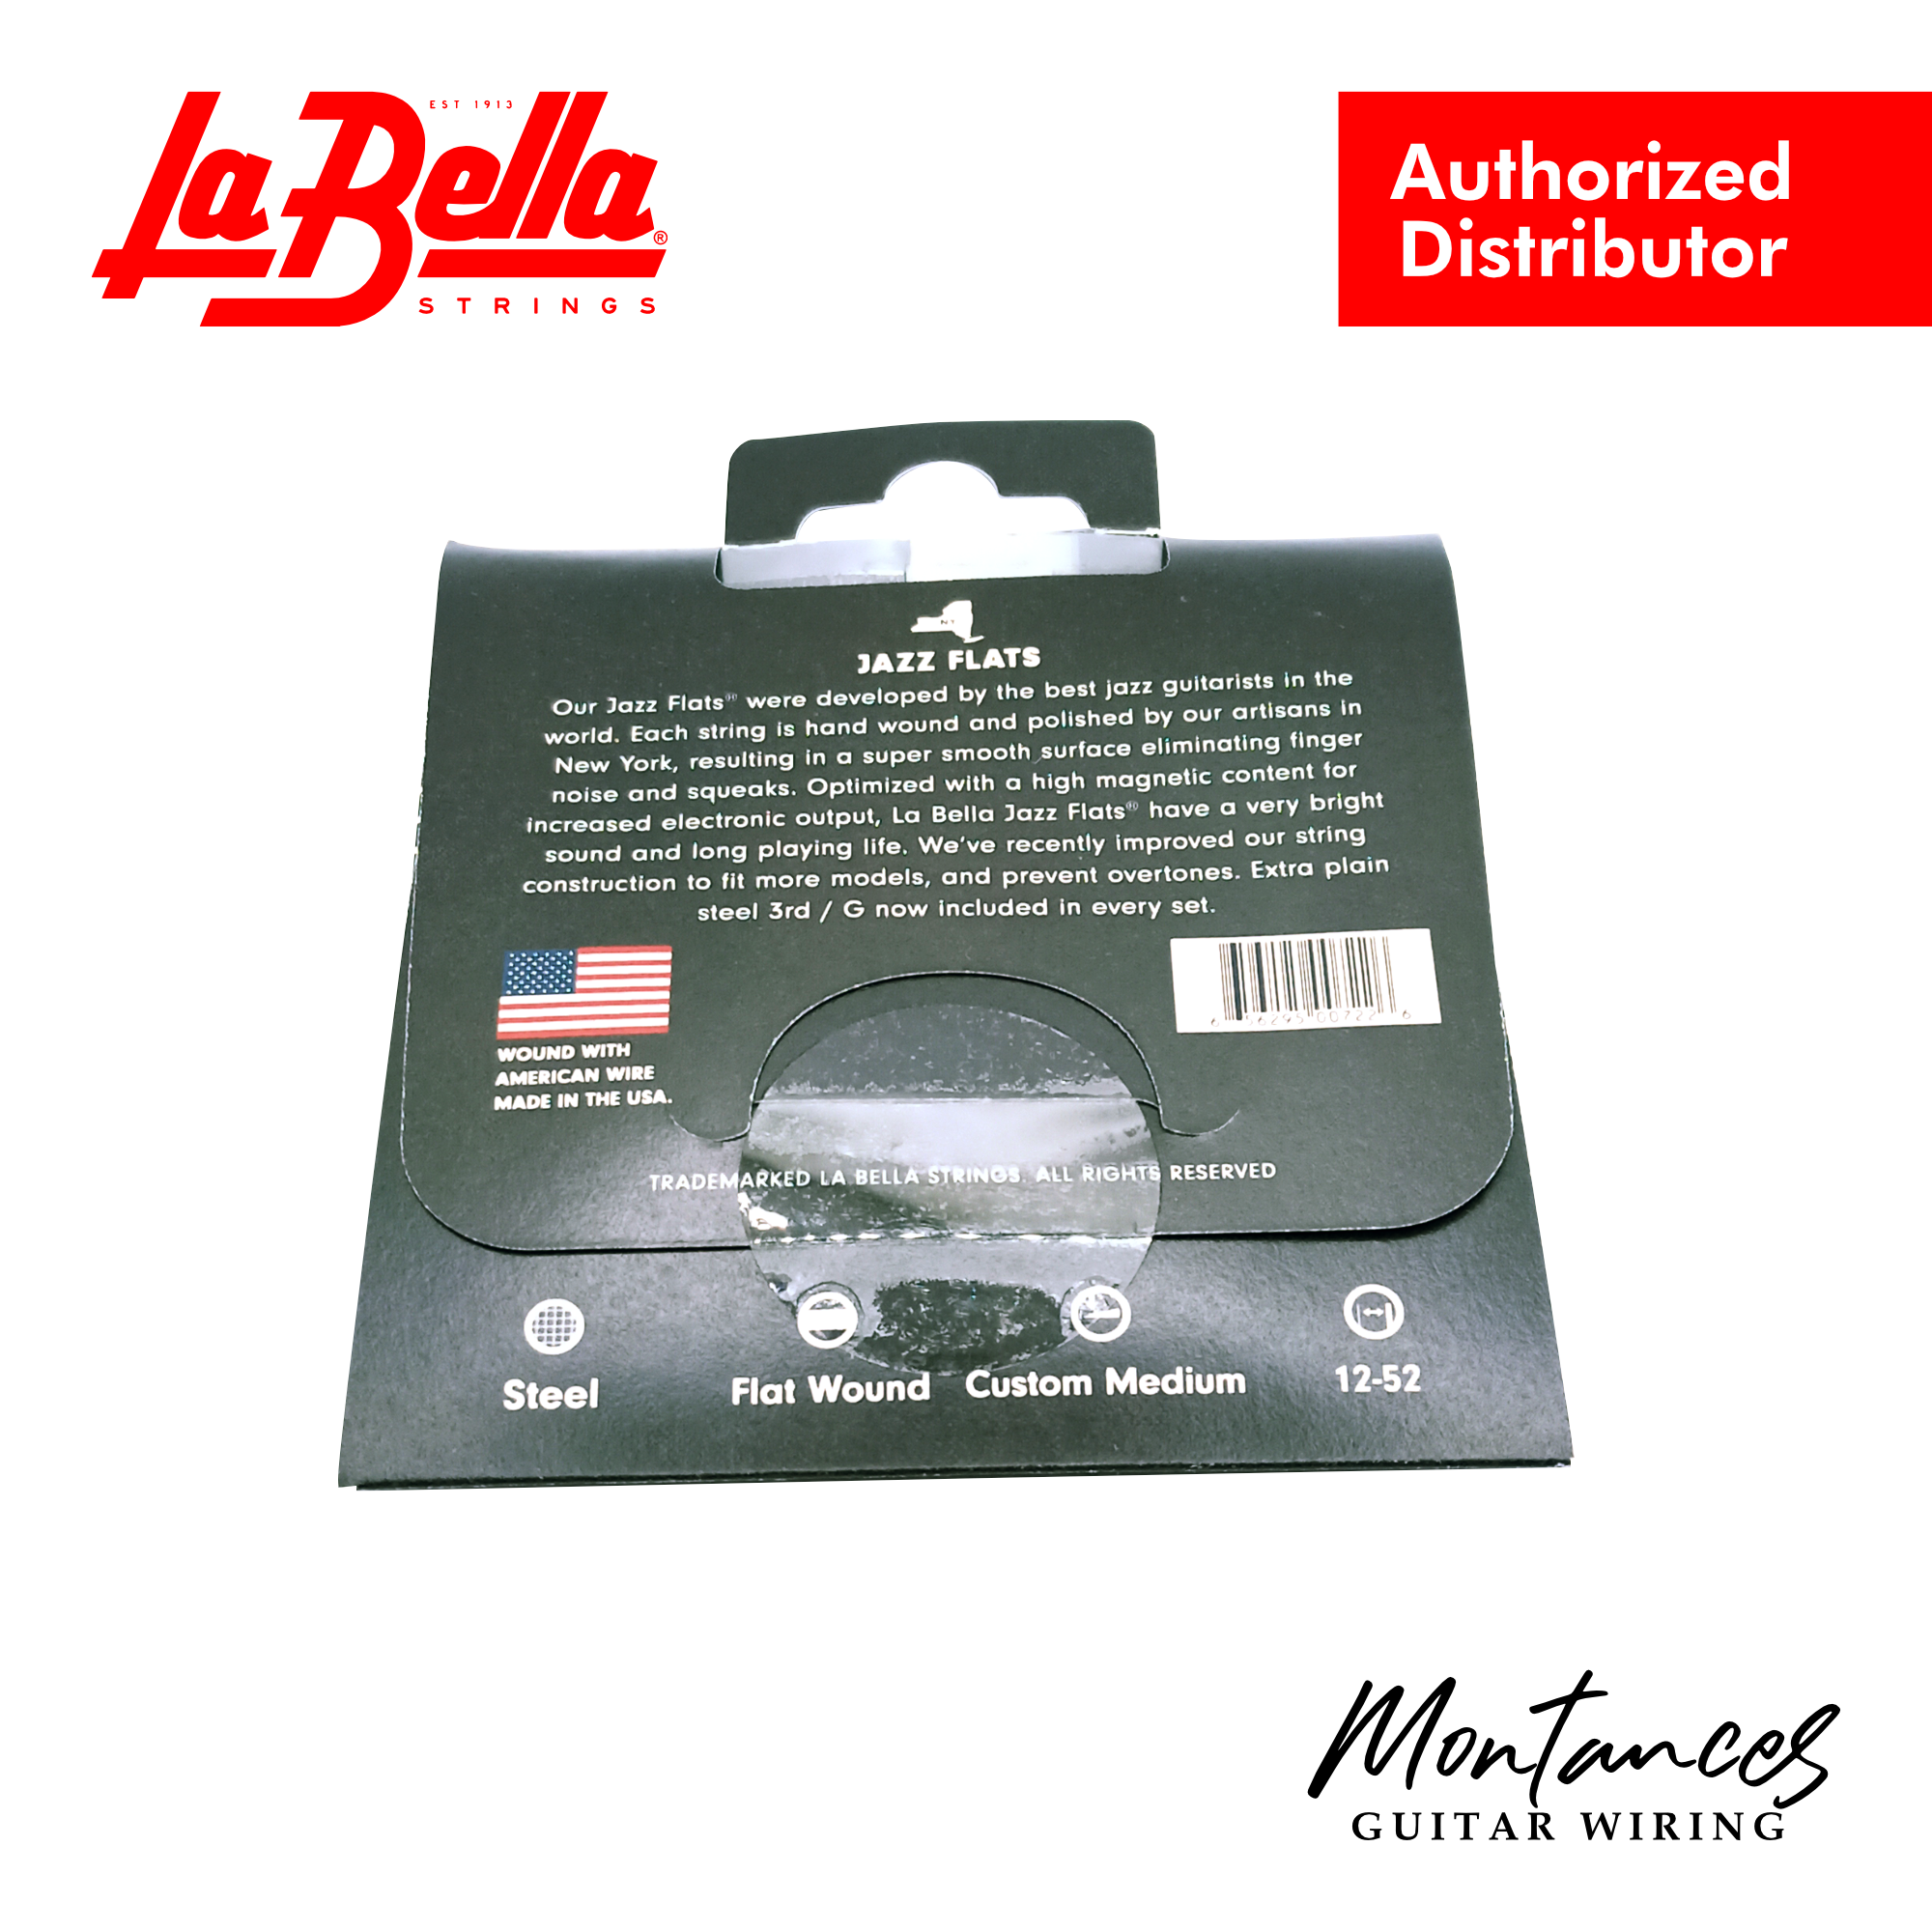 La Bella 20PCM Jazz Flats - Custom Medium 12-52 - Electric Guitar Strings